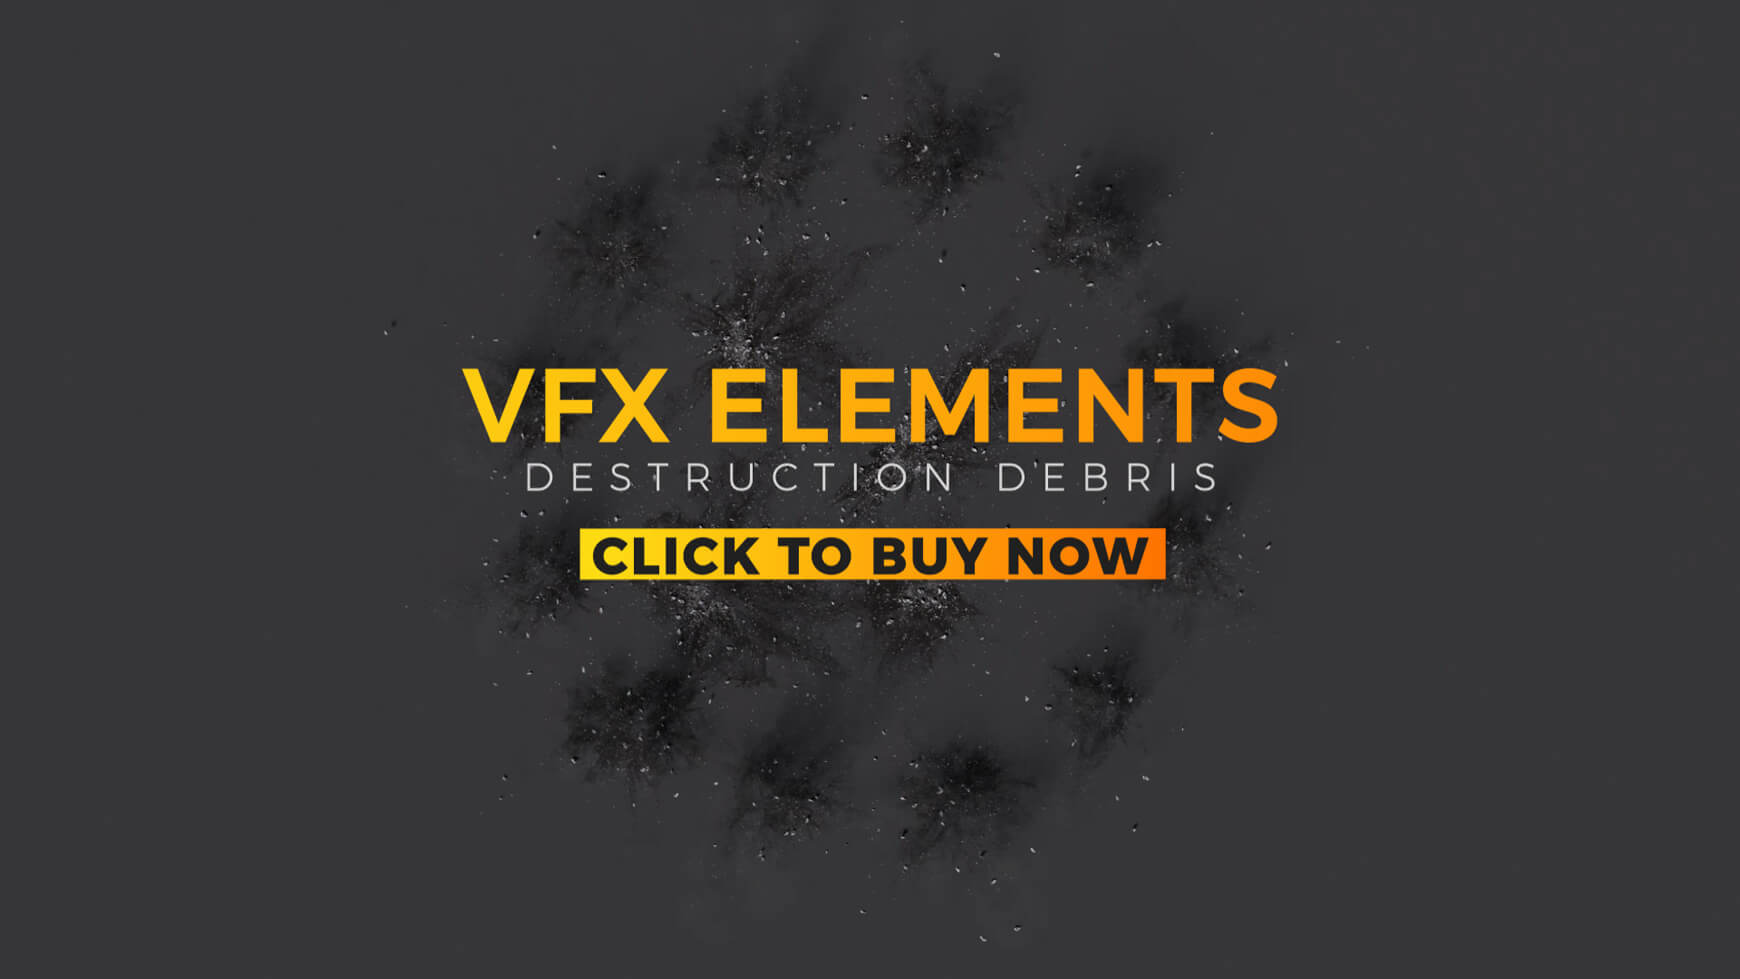 VFX Elements Destruction Debris Volume 1